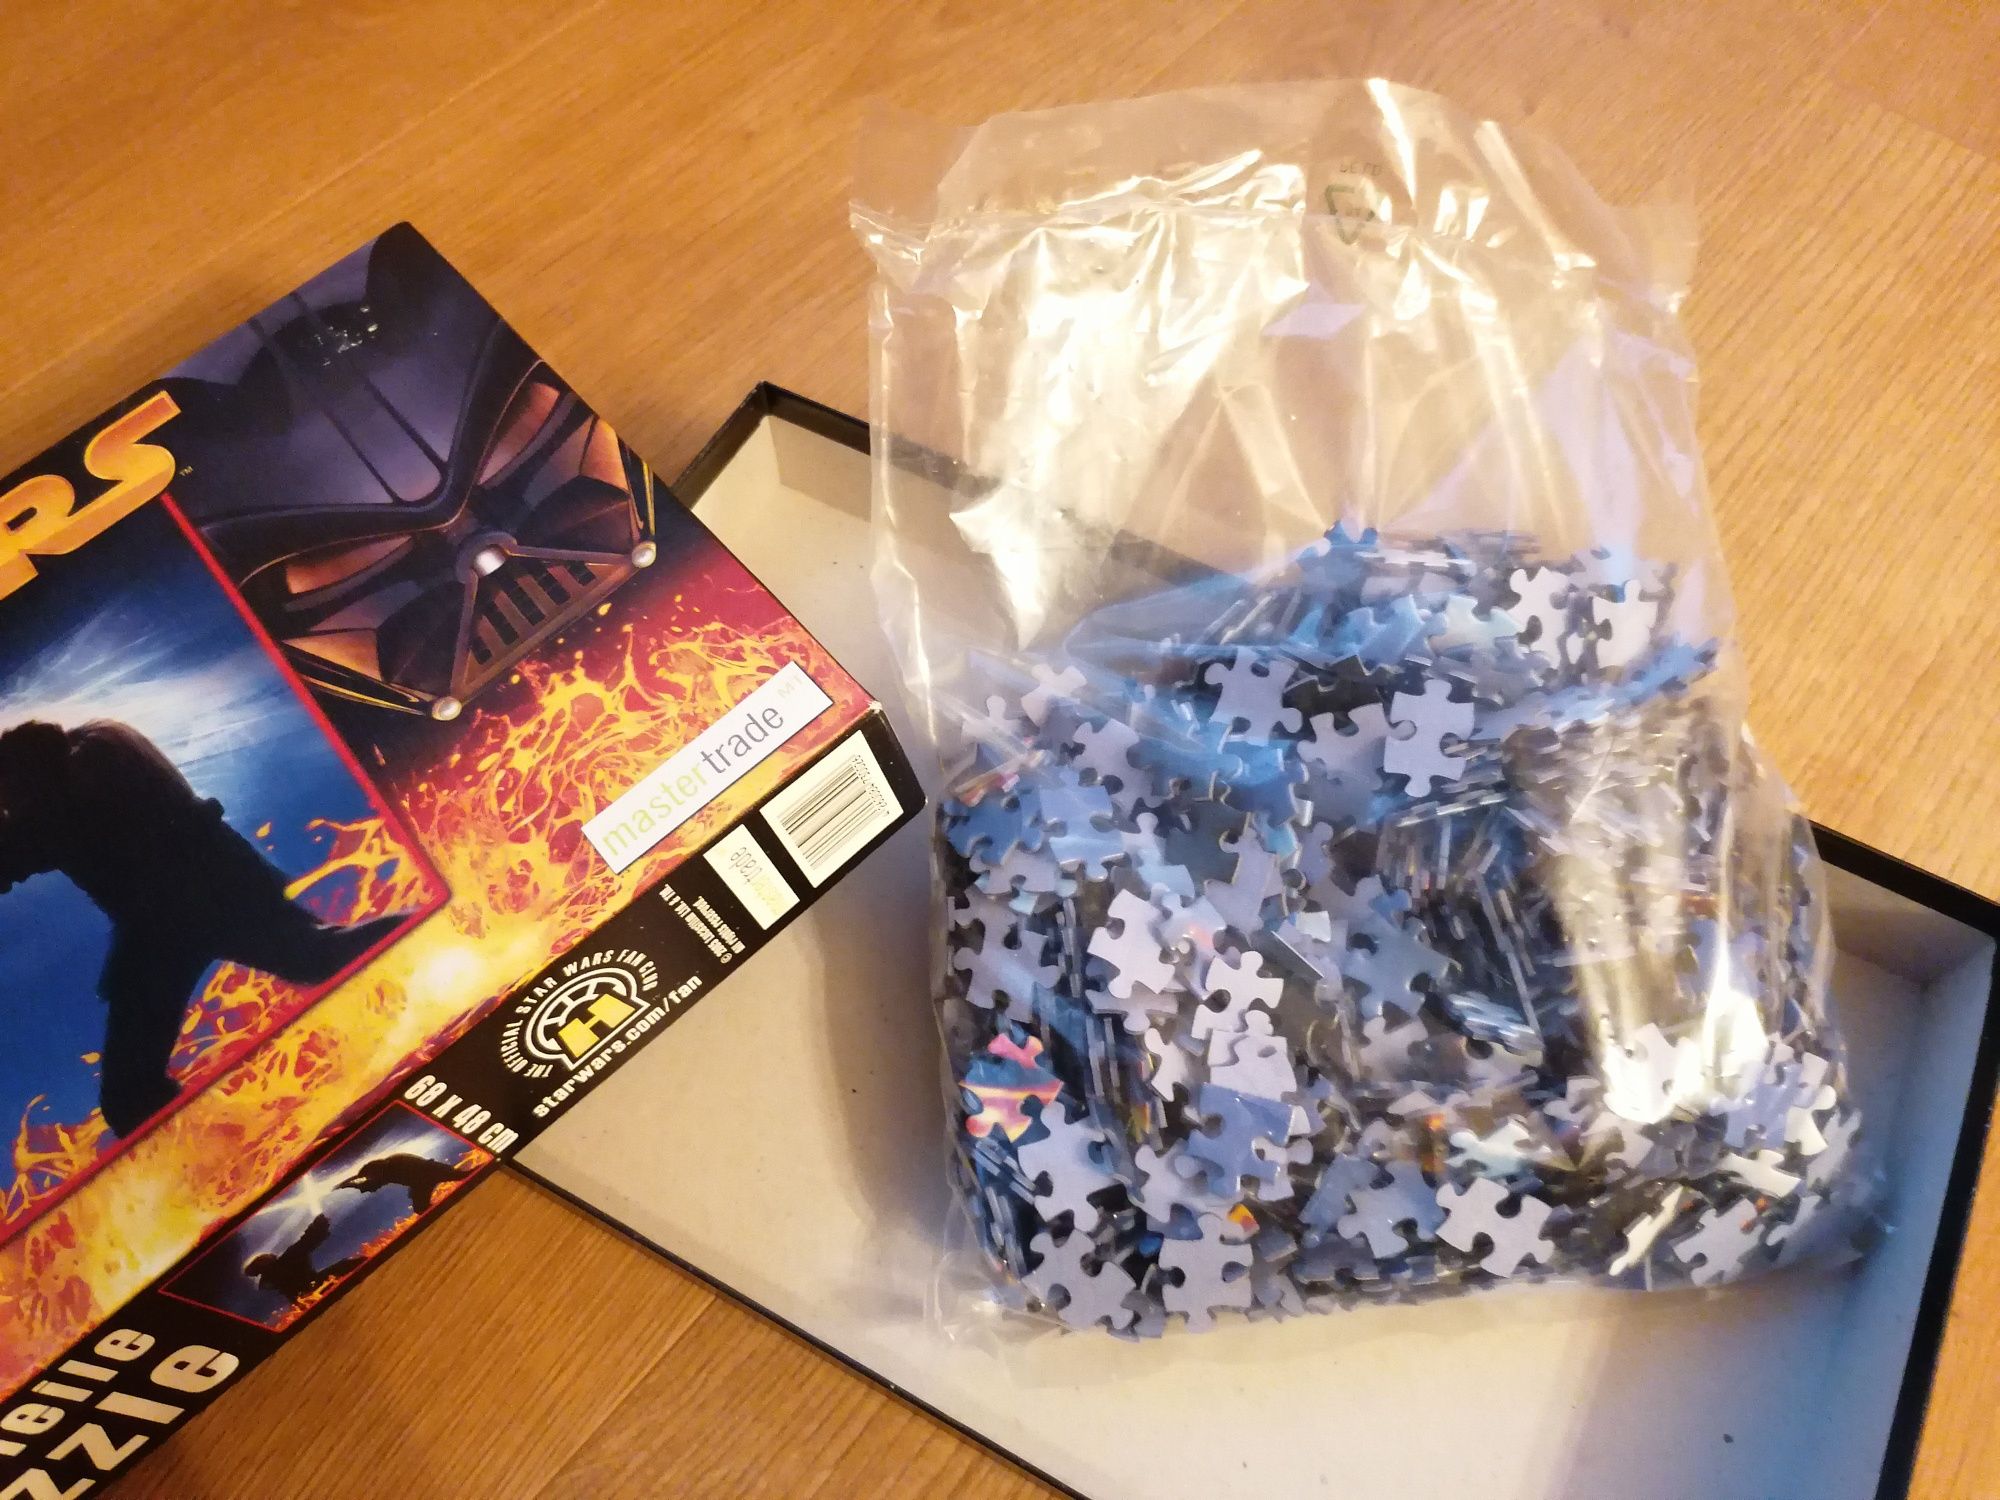 Puzzle Star Wars - 1000 piese